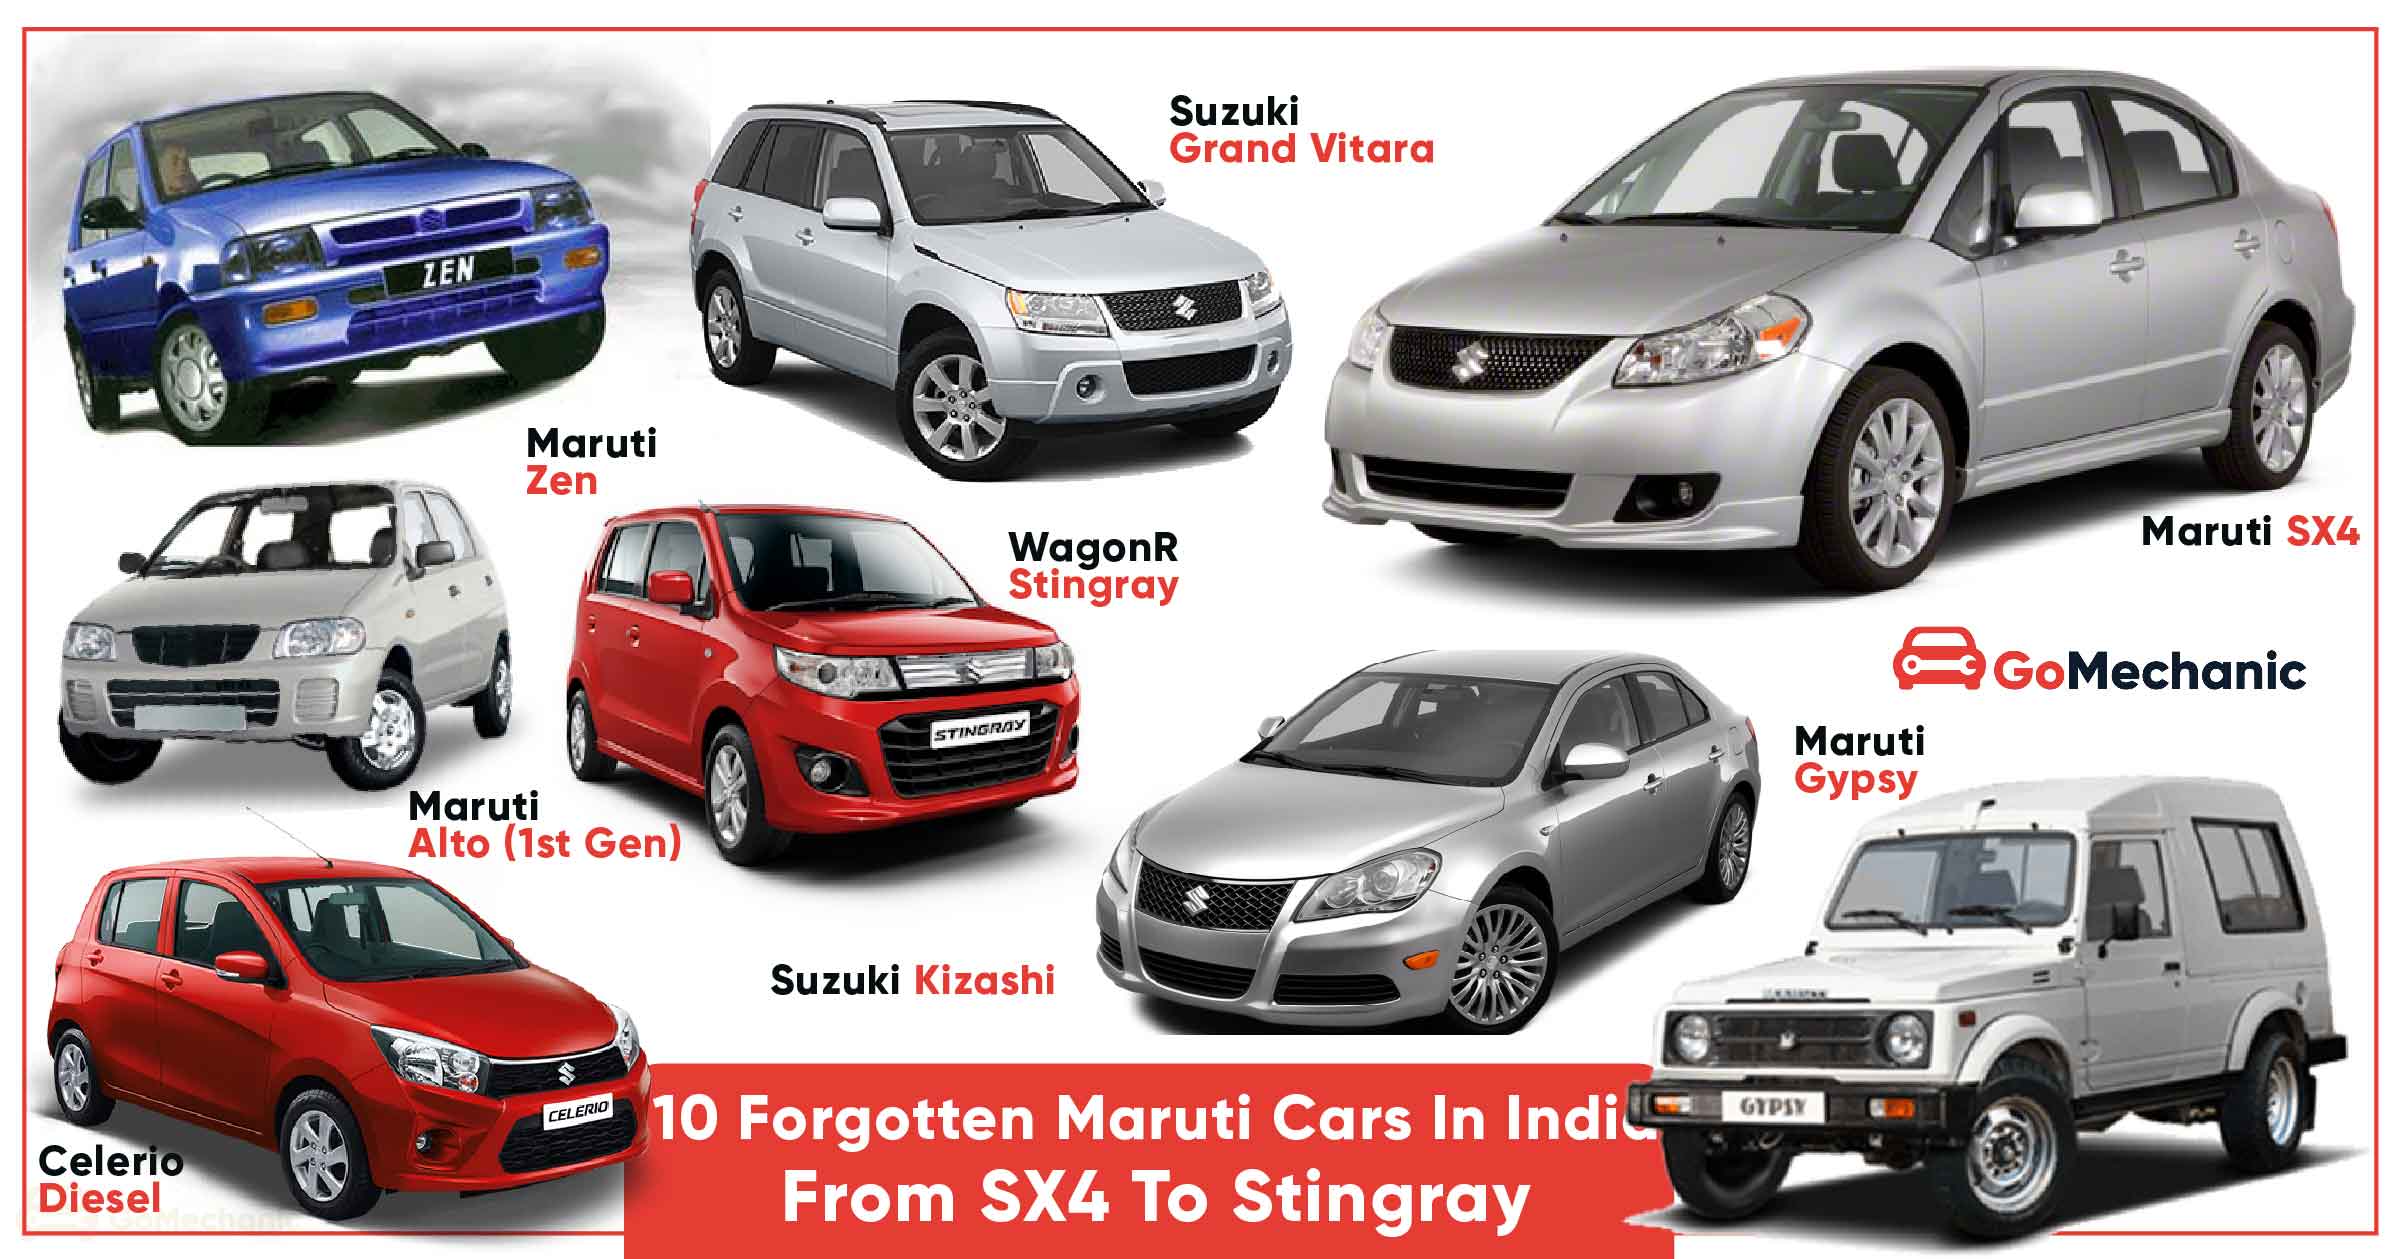 Suzuki model names